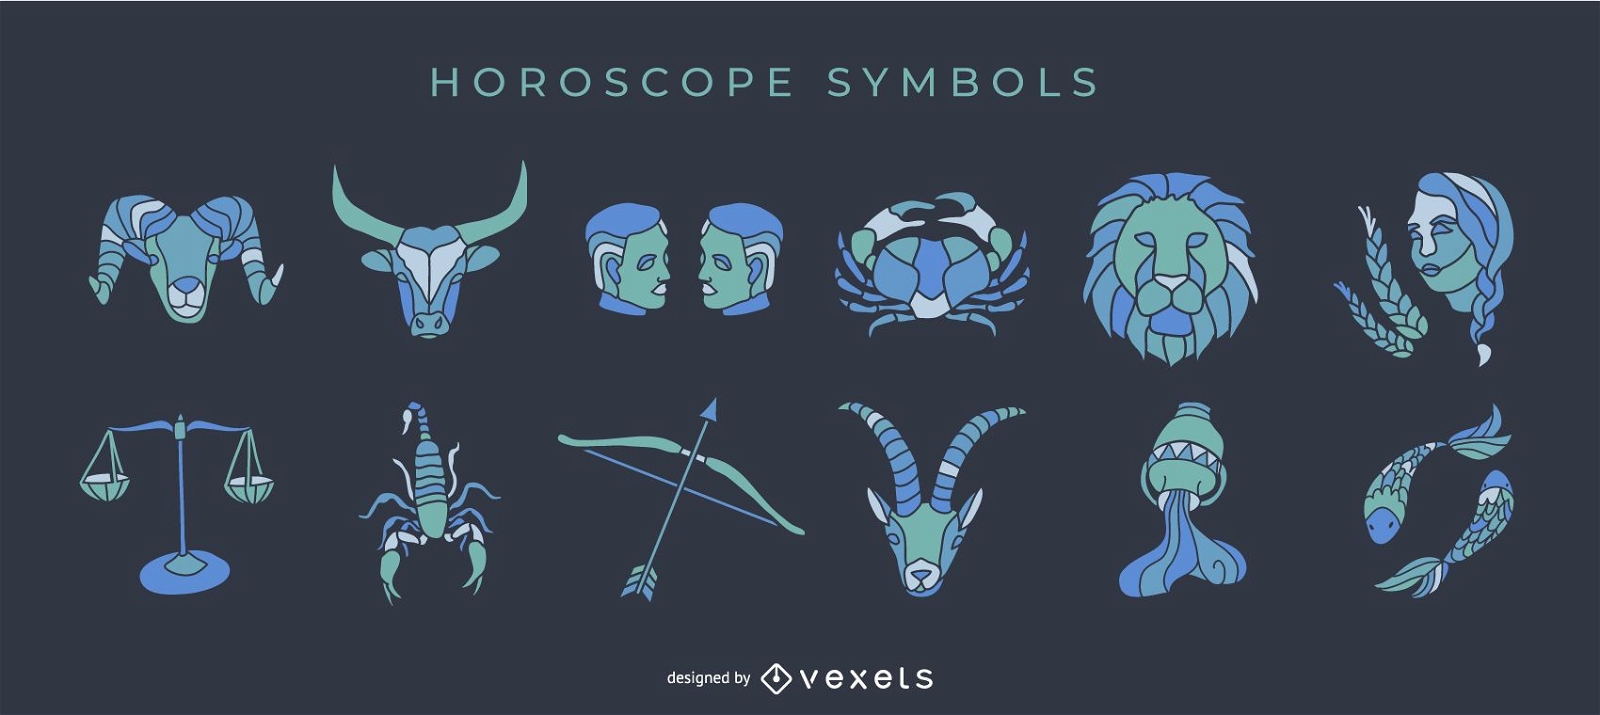 Horoscope symbols vector pack